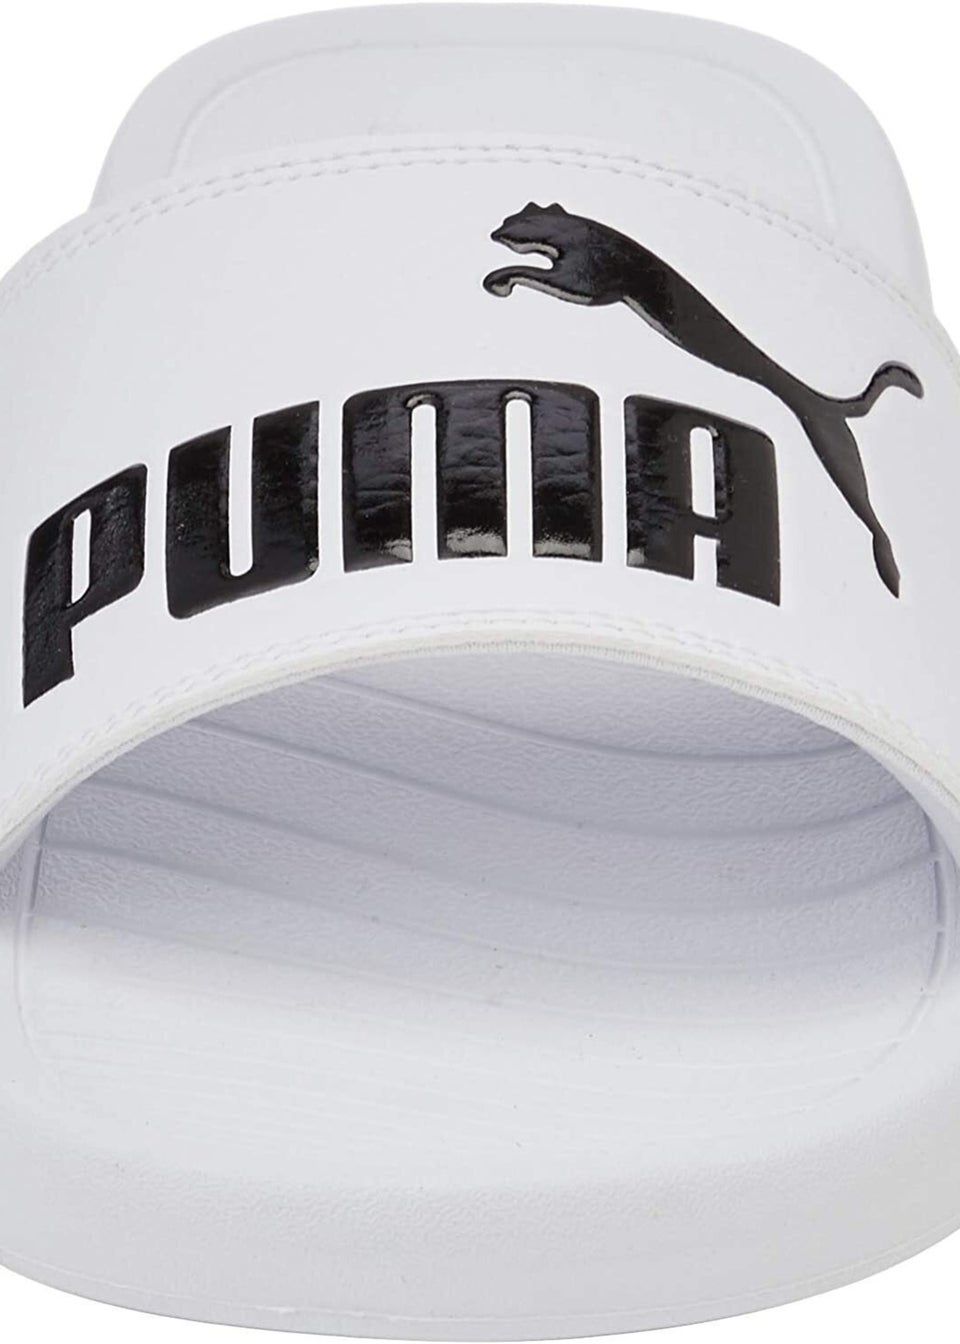 Puma White/Black Popcat 20 Sliders